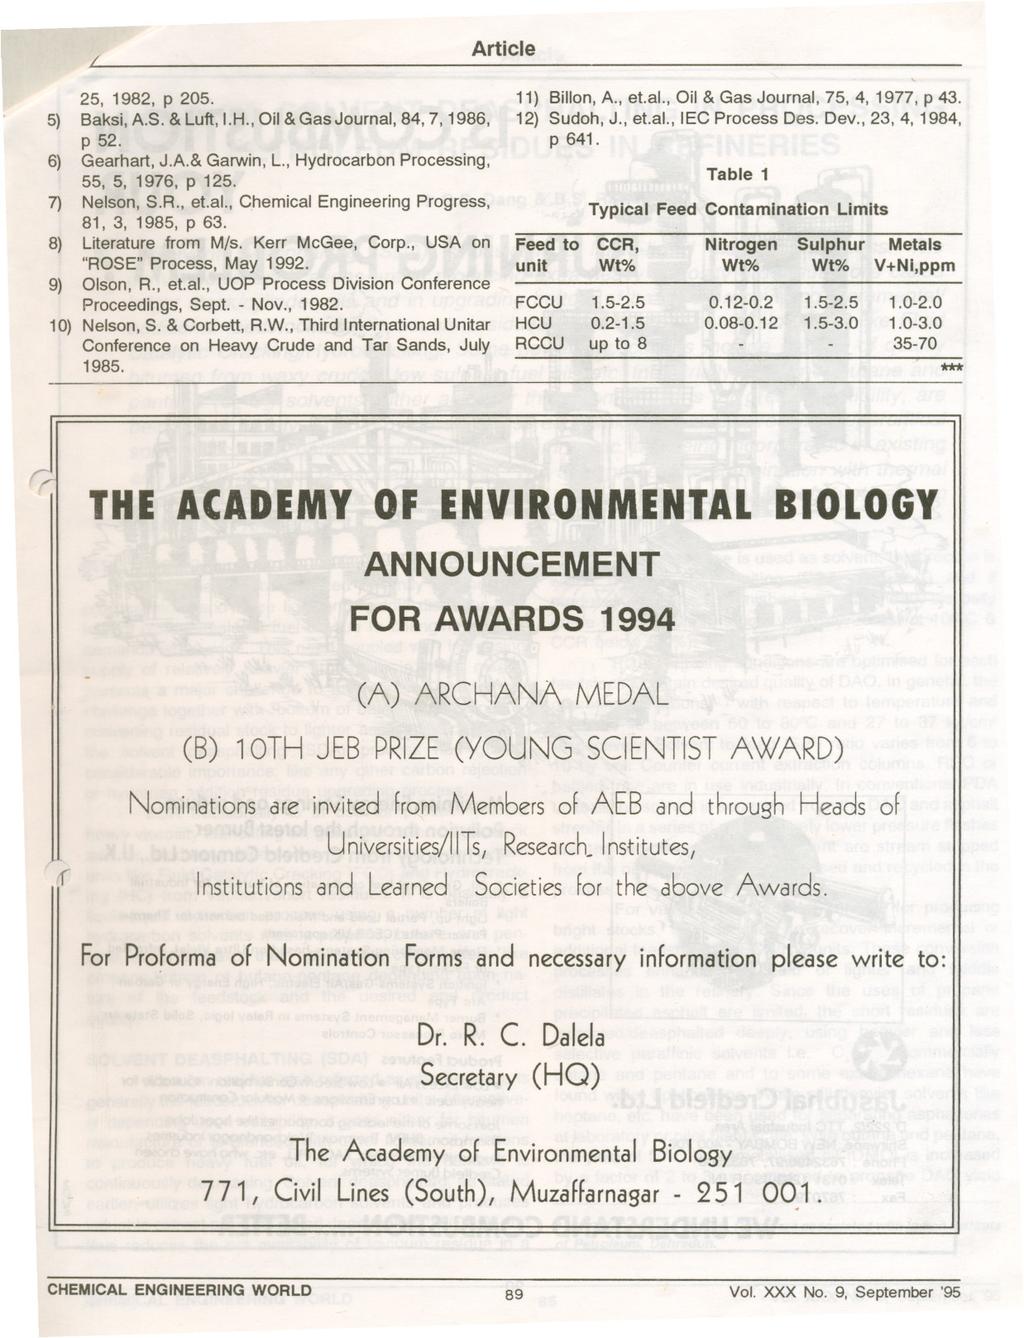 L Article 25, 1982, P 205. 5) Baksi, A.S. & Luft,.H., Oil & Gas Journal, 84, 7, 1986, P 52. 6) Gearhart, J.A.& Garwin, L., Hydrocarbon Processing, 55, 5, 1976, P 125. 7) Nelson, S.R.